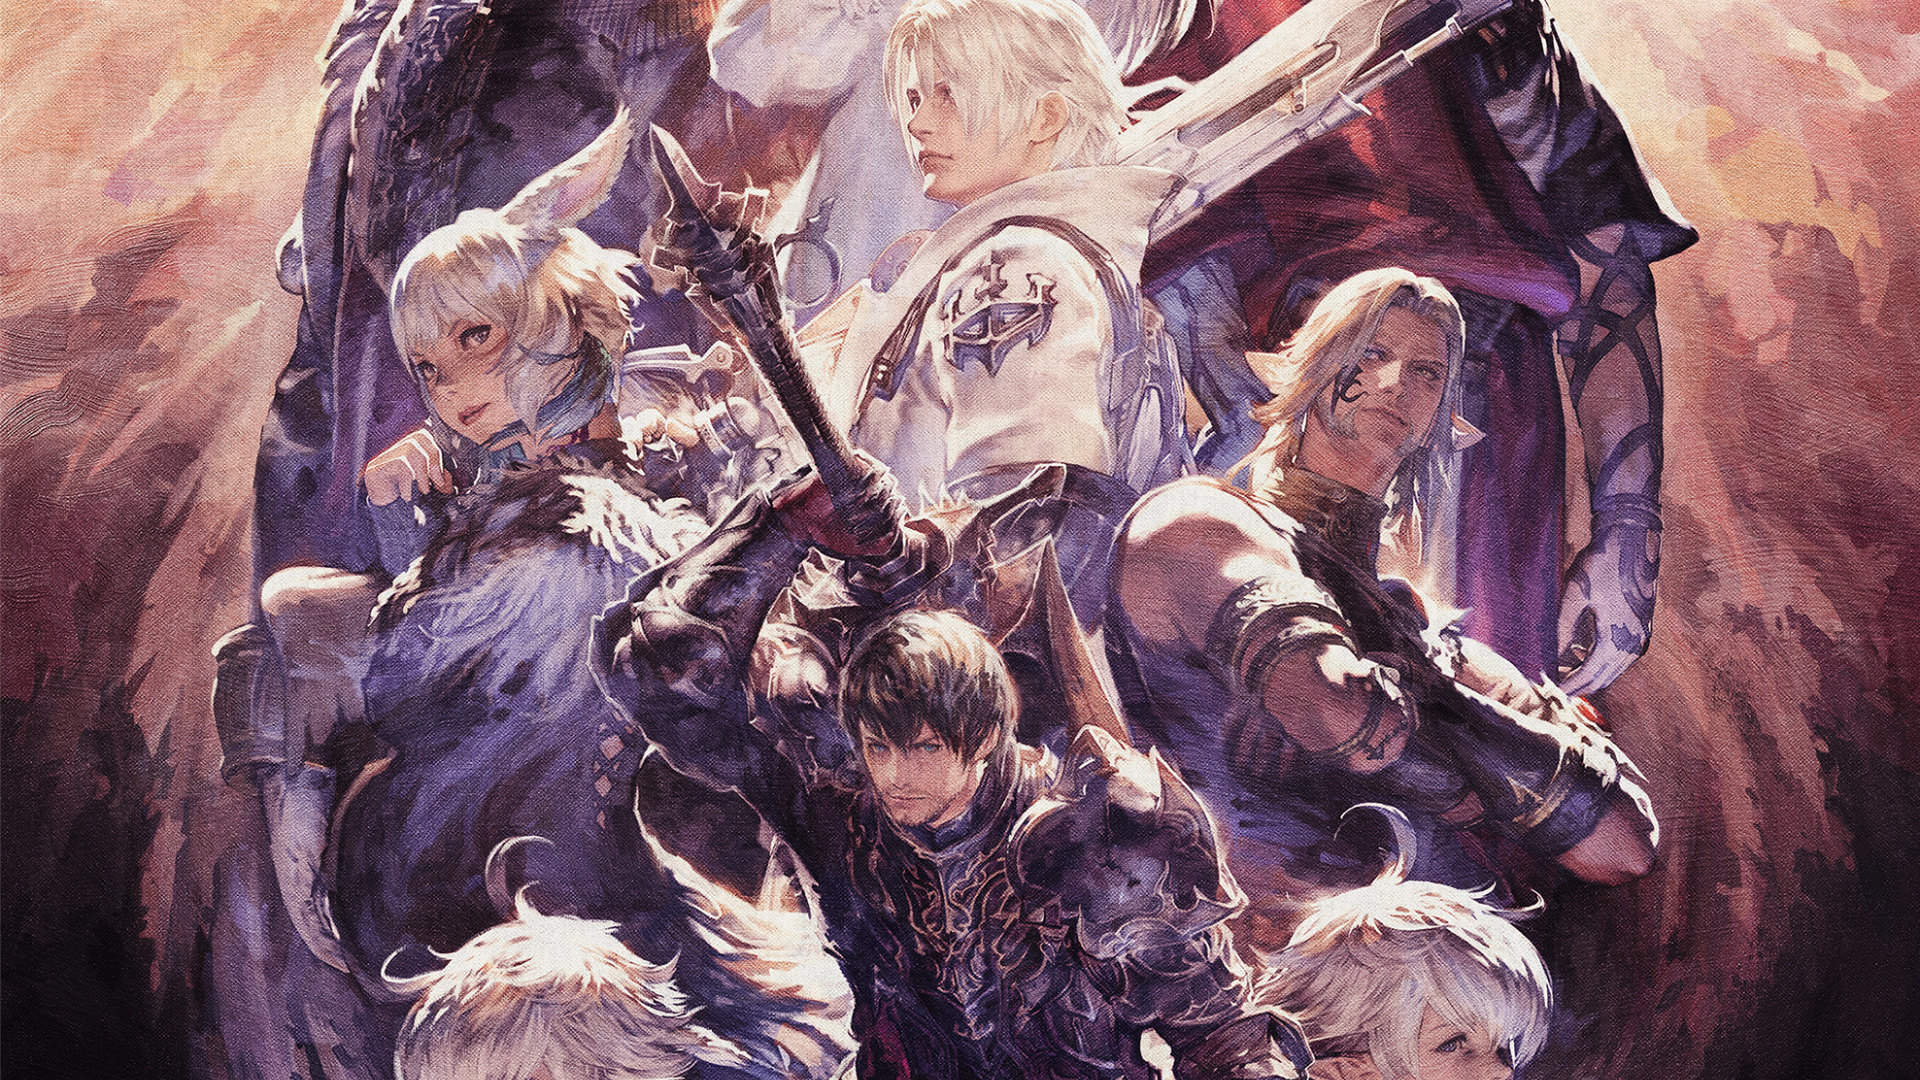 Final Fantasy XIV: Version A Realm Reborn turns 7